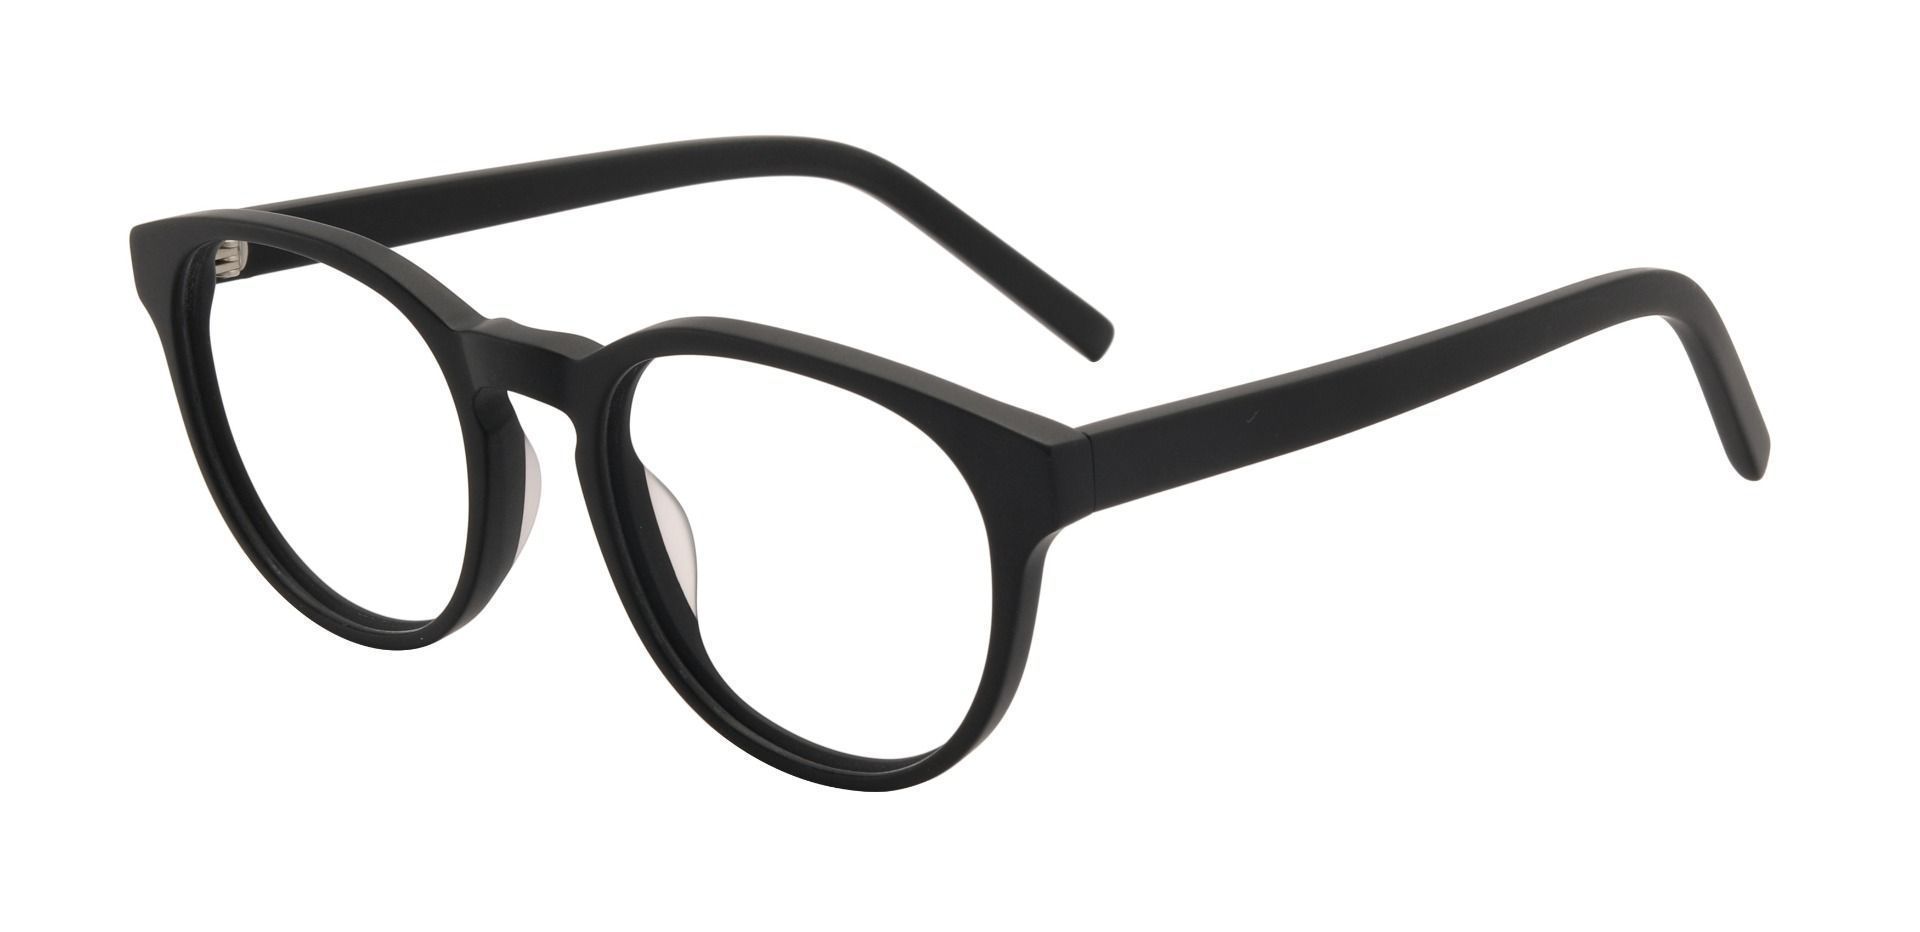 Wayland Oval Prescription Glasses - Black